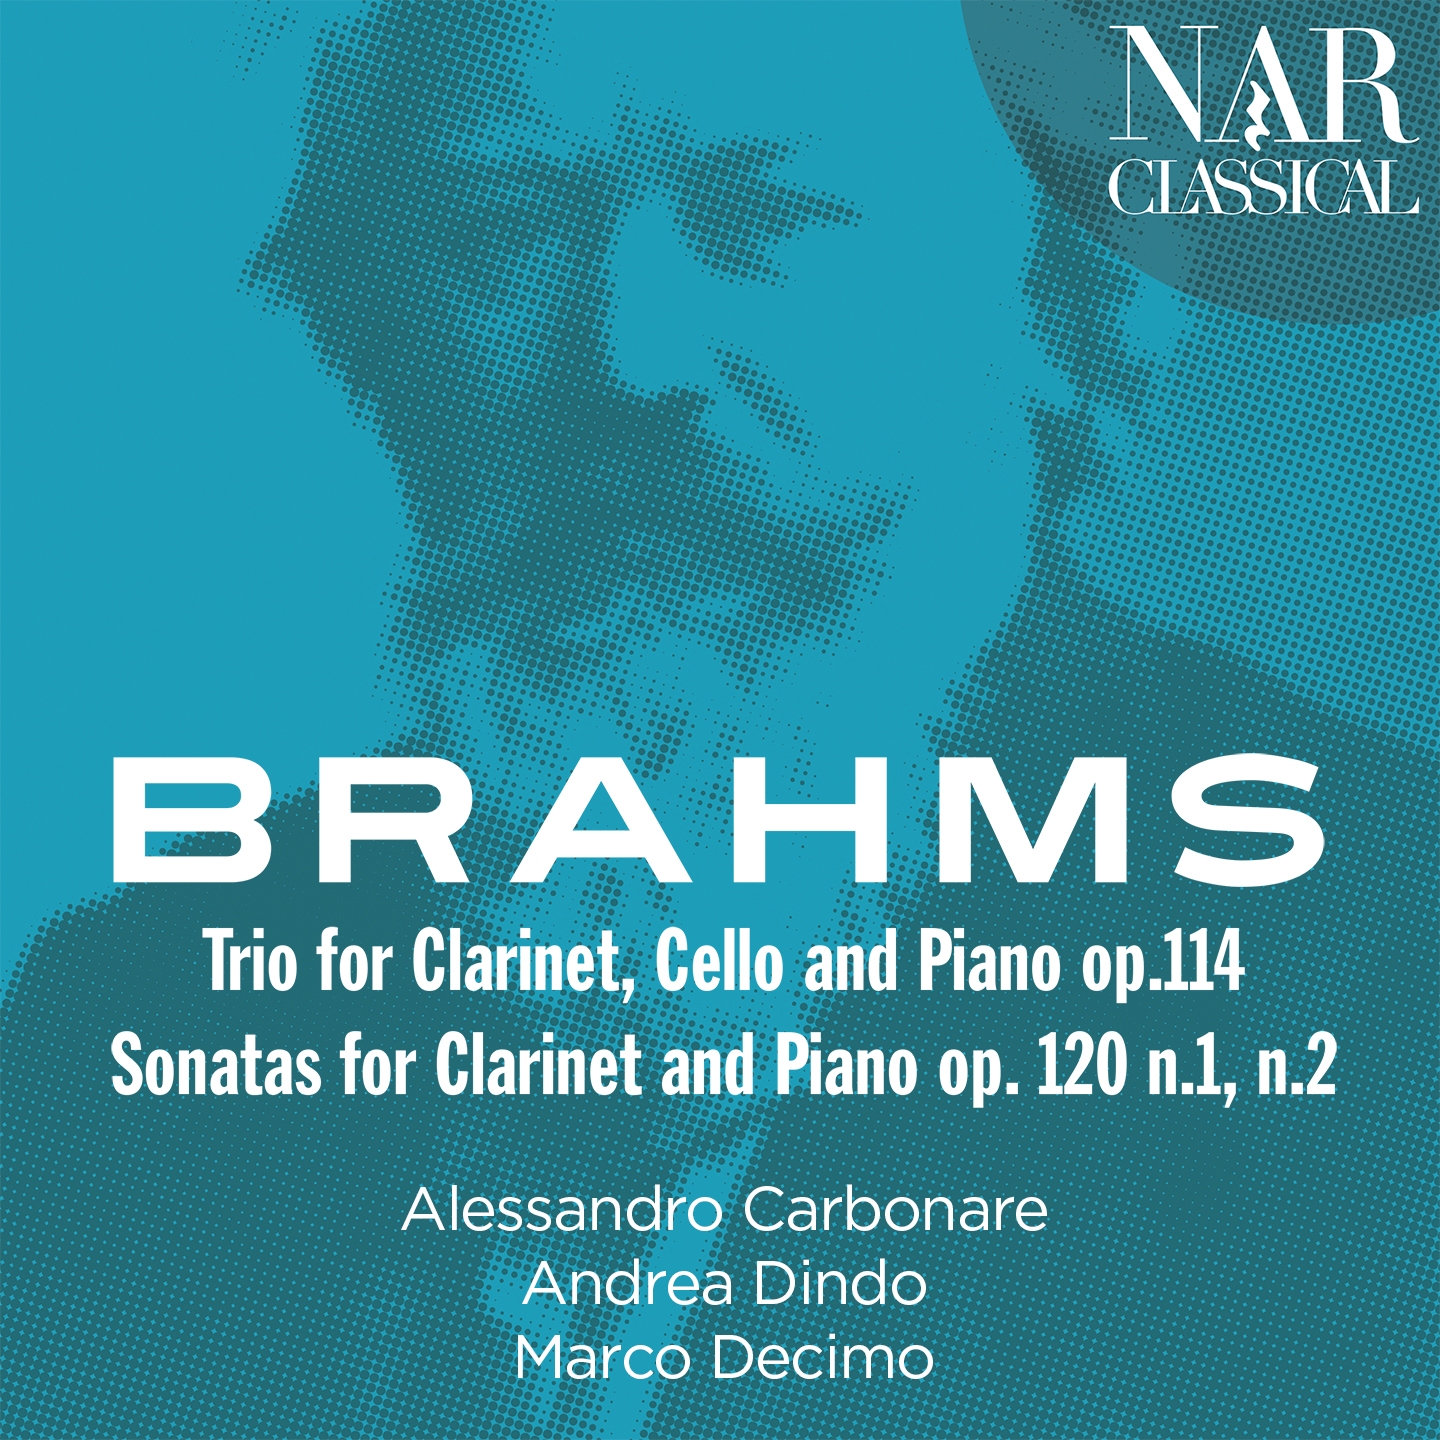 Clarinet Trio in A Minor, Op.114: IV. Allegro